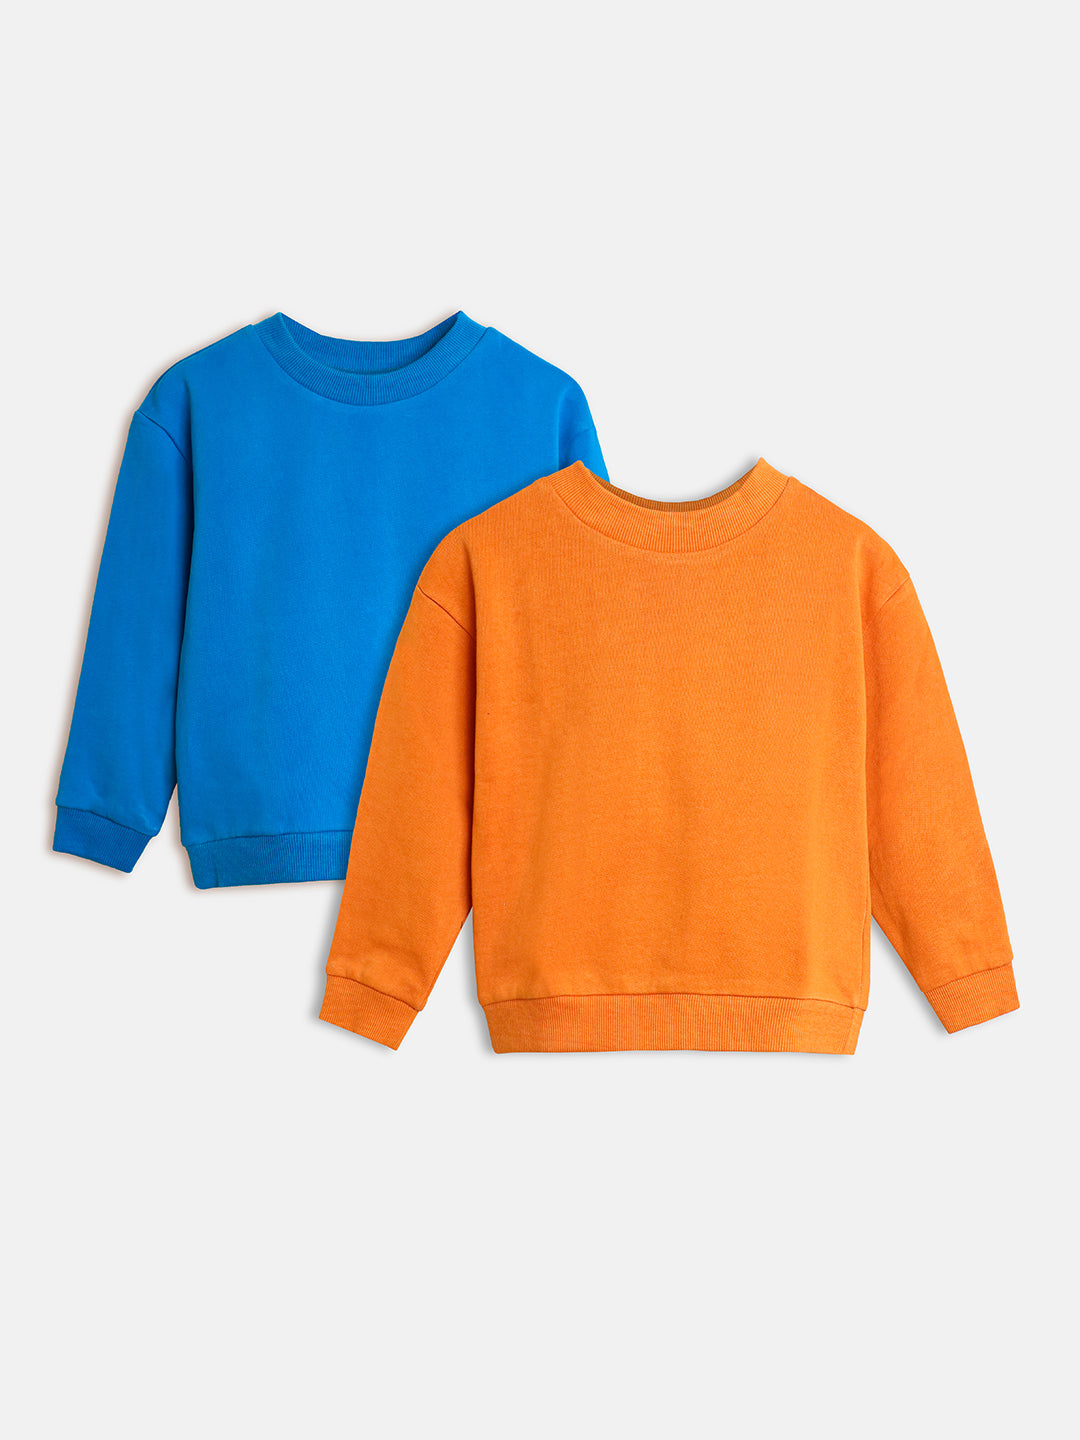 Set of 2 lightweight sweatshirts: Orange and Blue